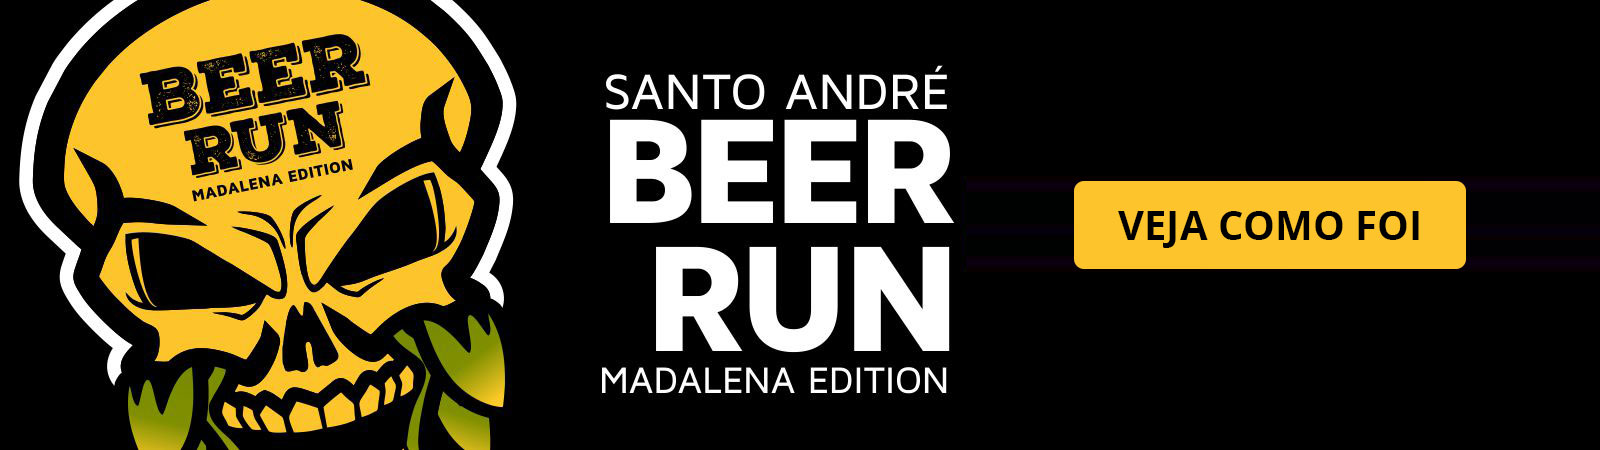 banner-madalena-edition-santo-andre-2019-como-foi